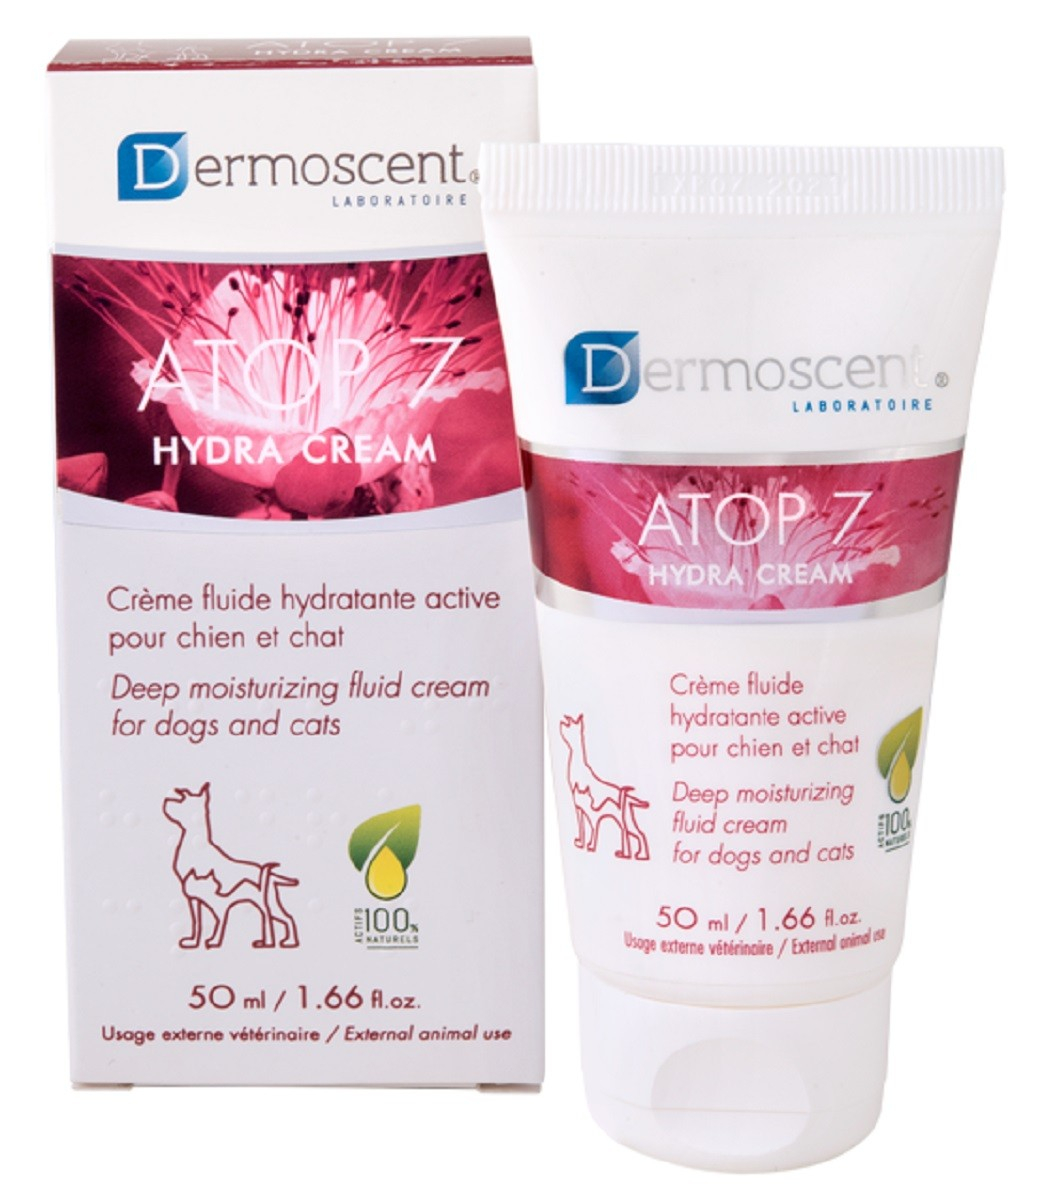 Dermoscent ATOP 7 Hydra Cream creme fluido hidratante activo